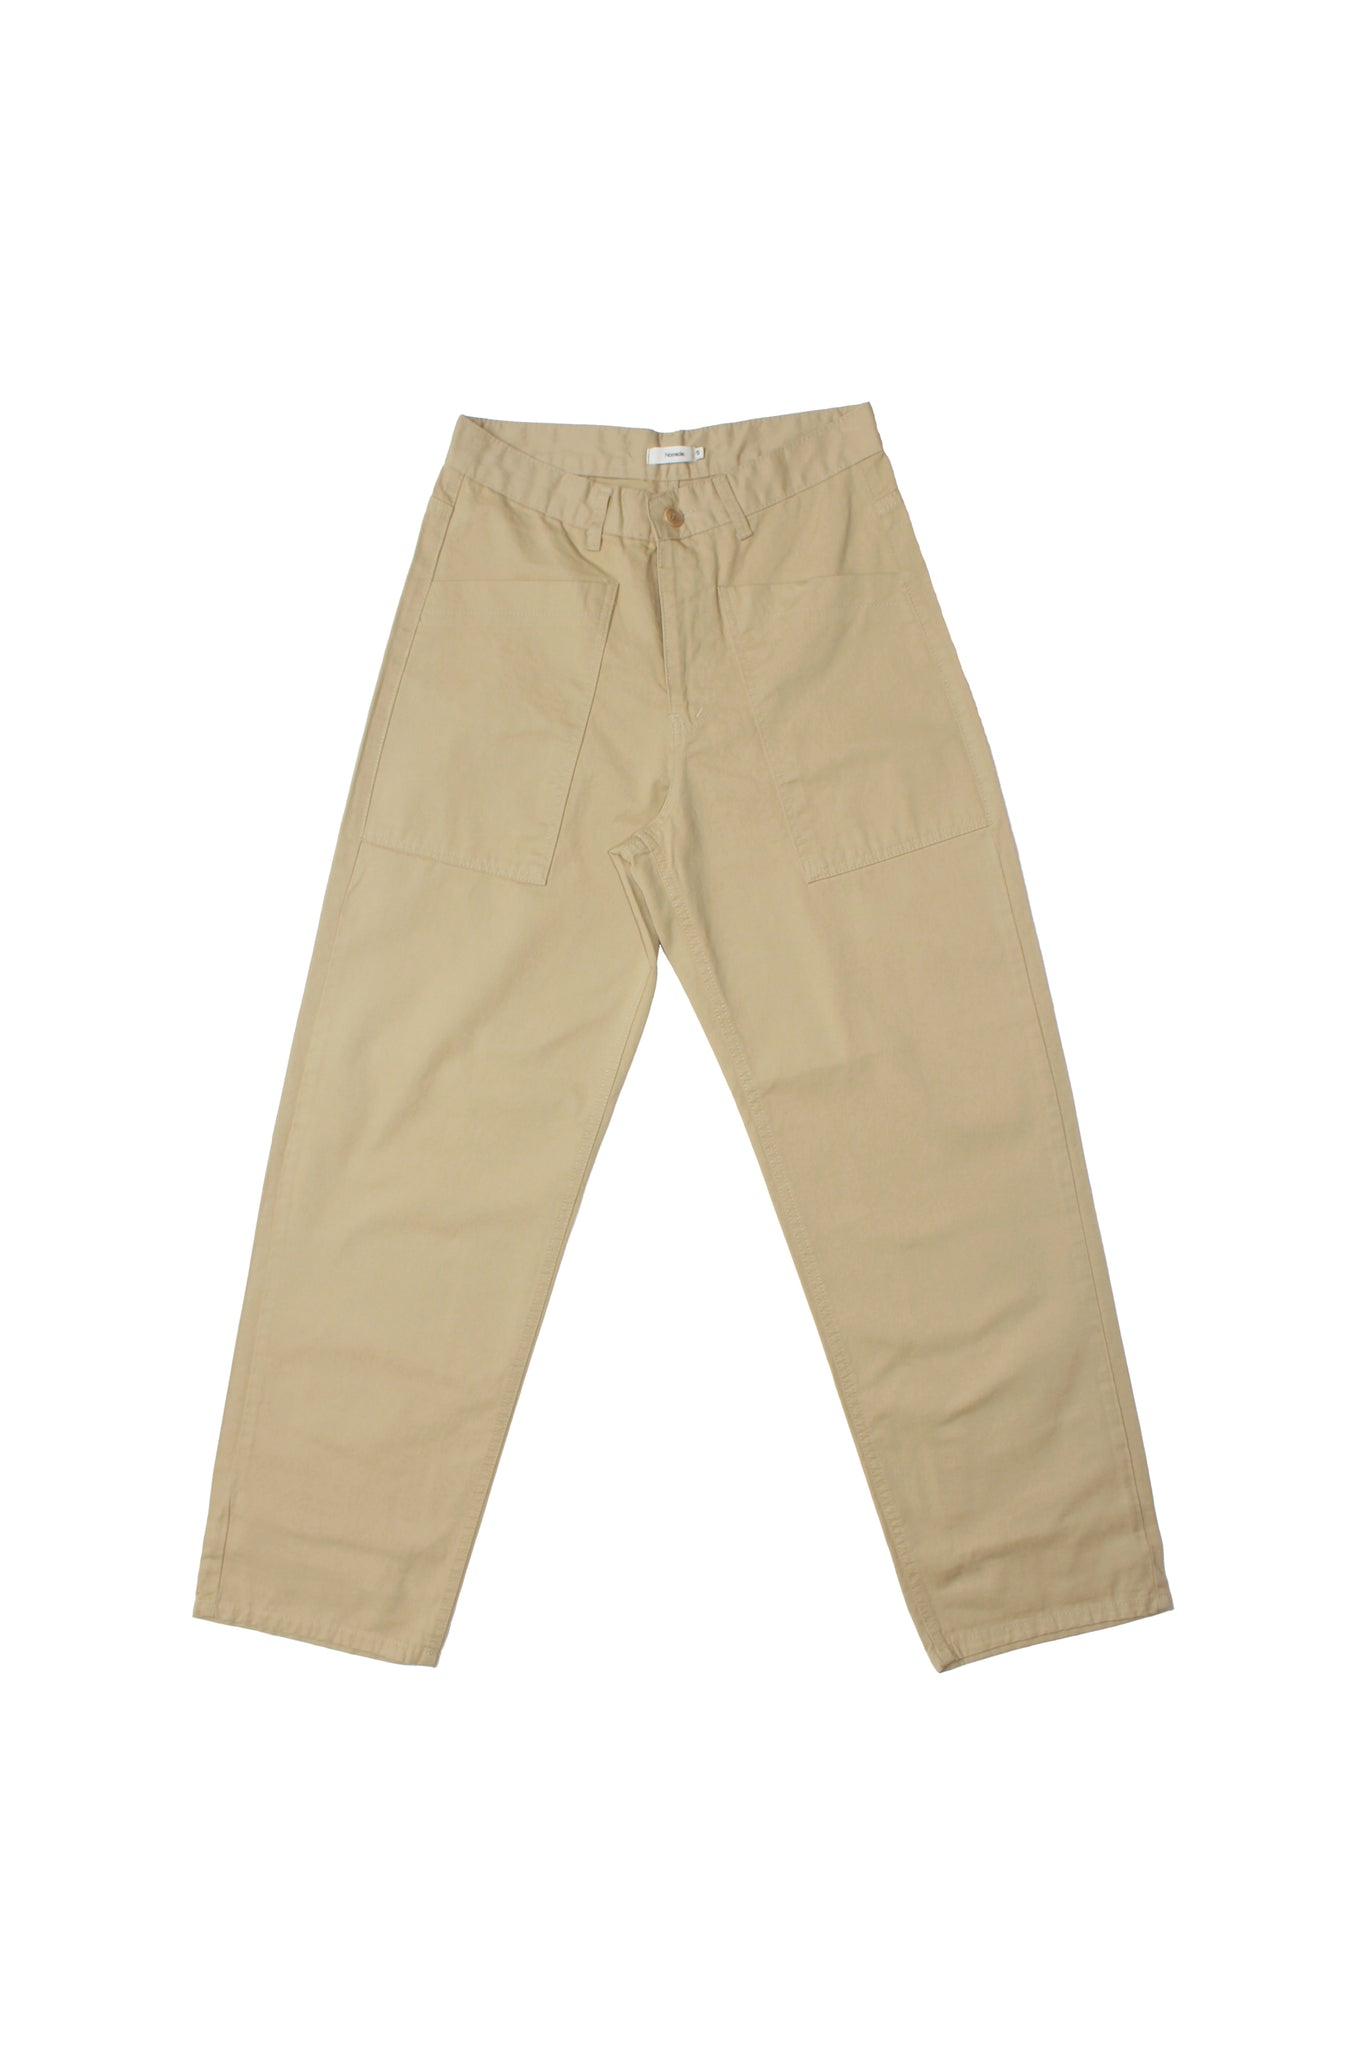 Cliff Cotton Pants in Khaki